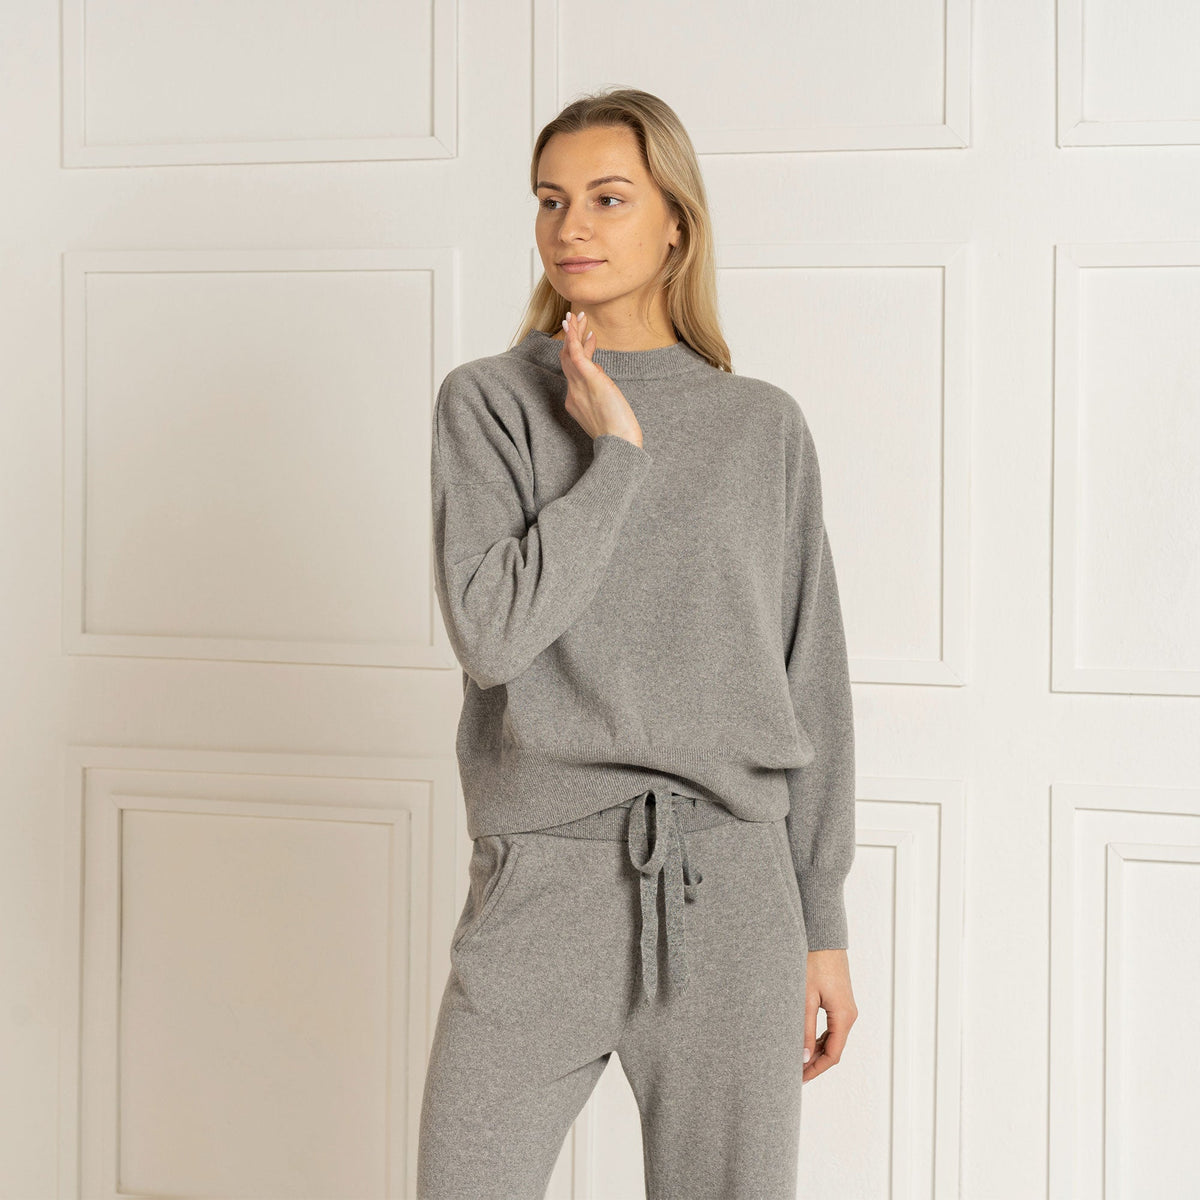 MENIQUE Knit Crew 100% Merino Wool Womens Shirtneck Sweater Oslo Light Gray